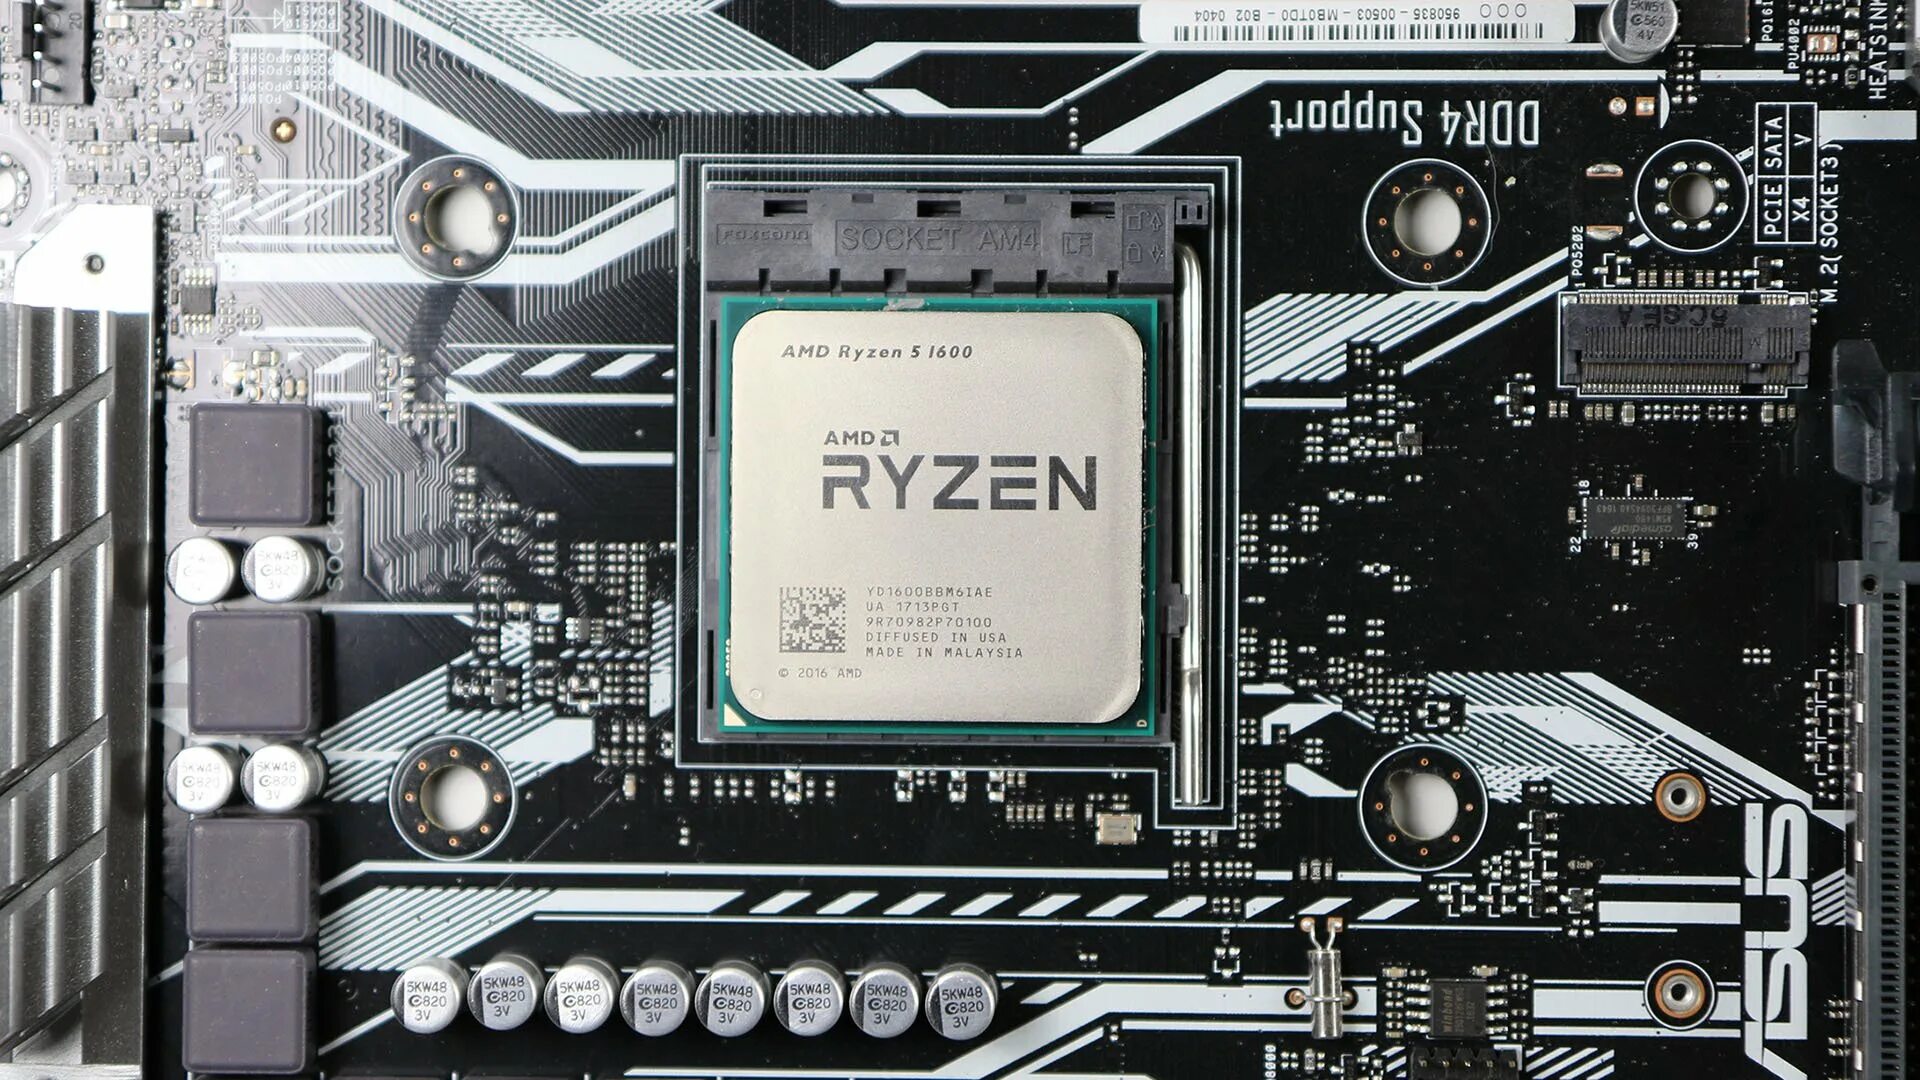 5 1600 купить. Ryzen 5 1600. AMD Ryazan 5 1600. Ryzen 5 1600x. Процессор AMD Ryazan 5.